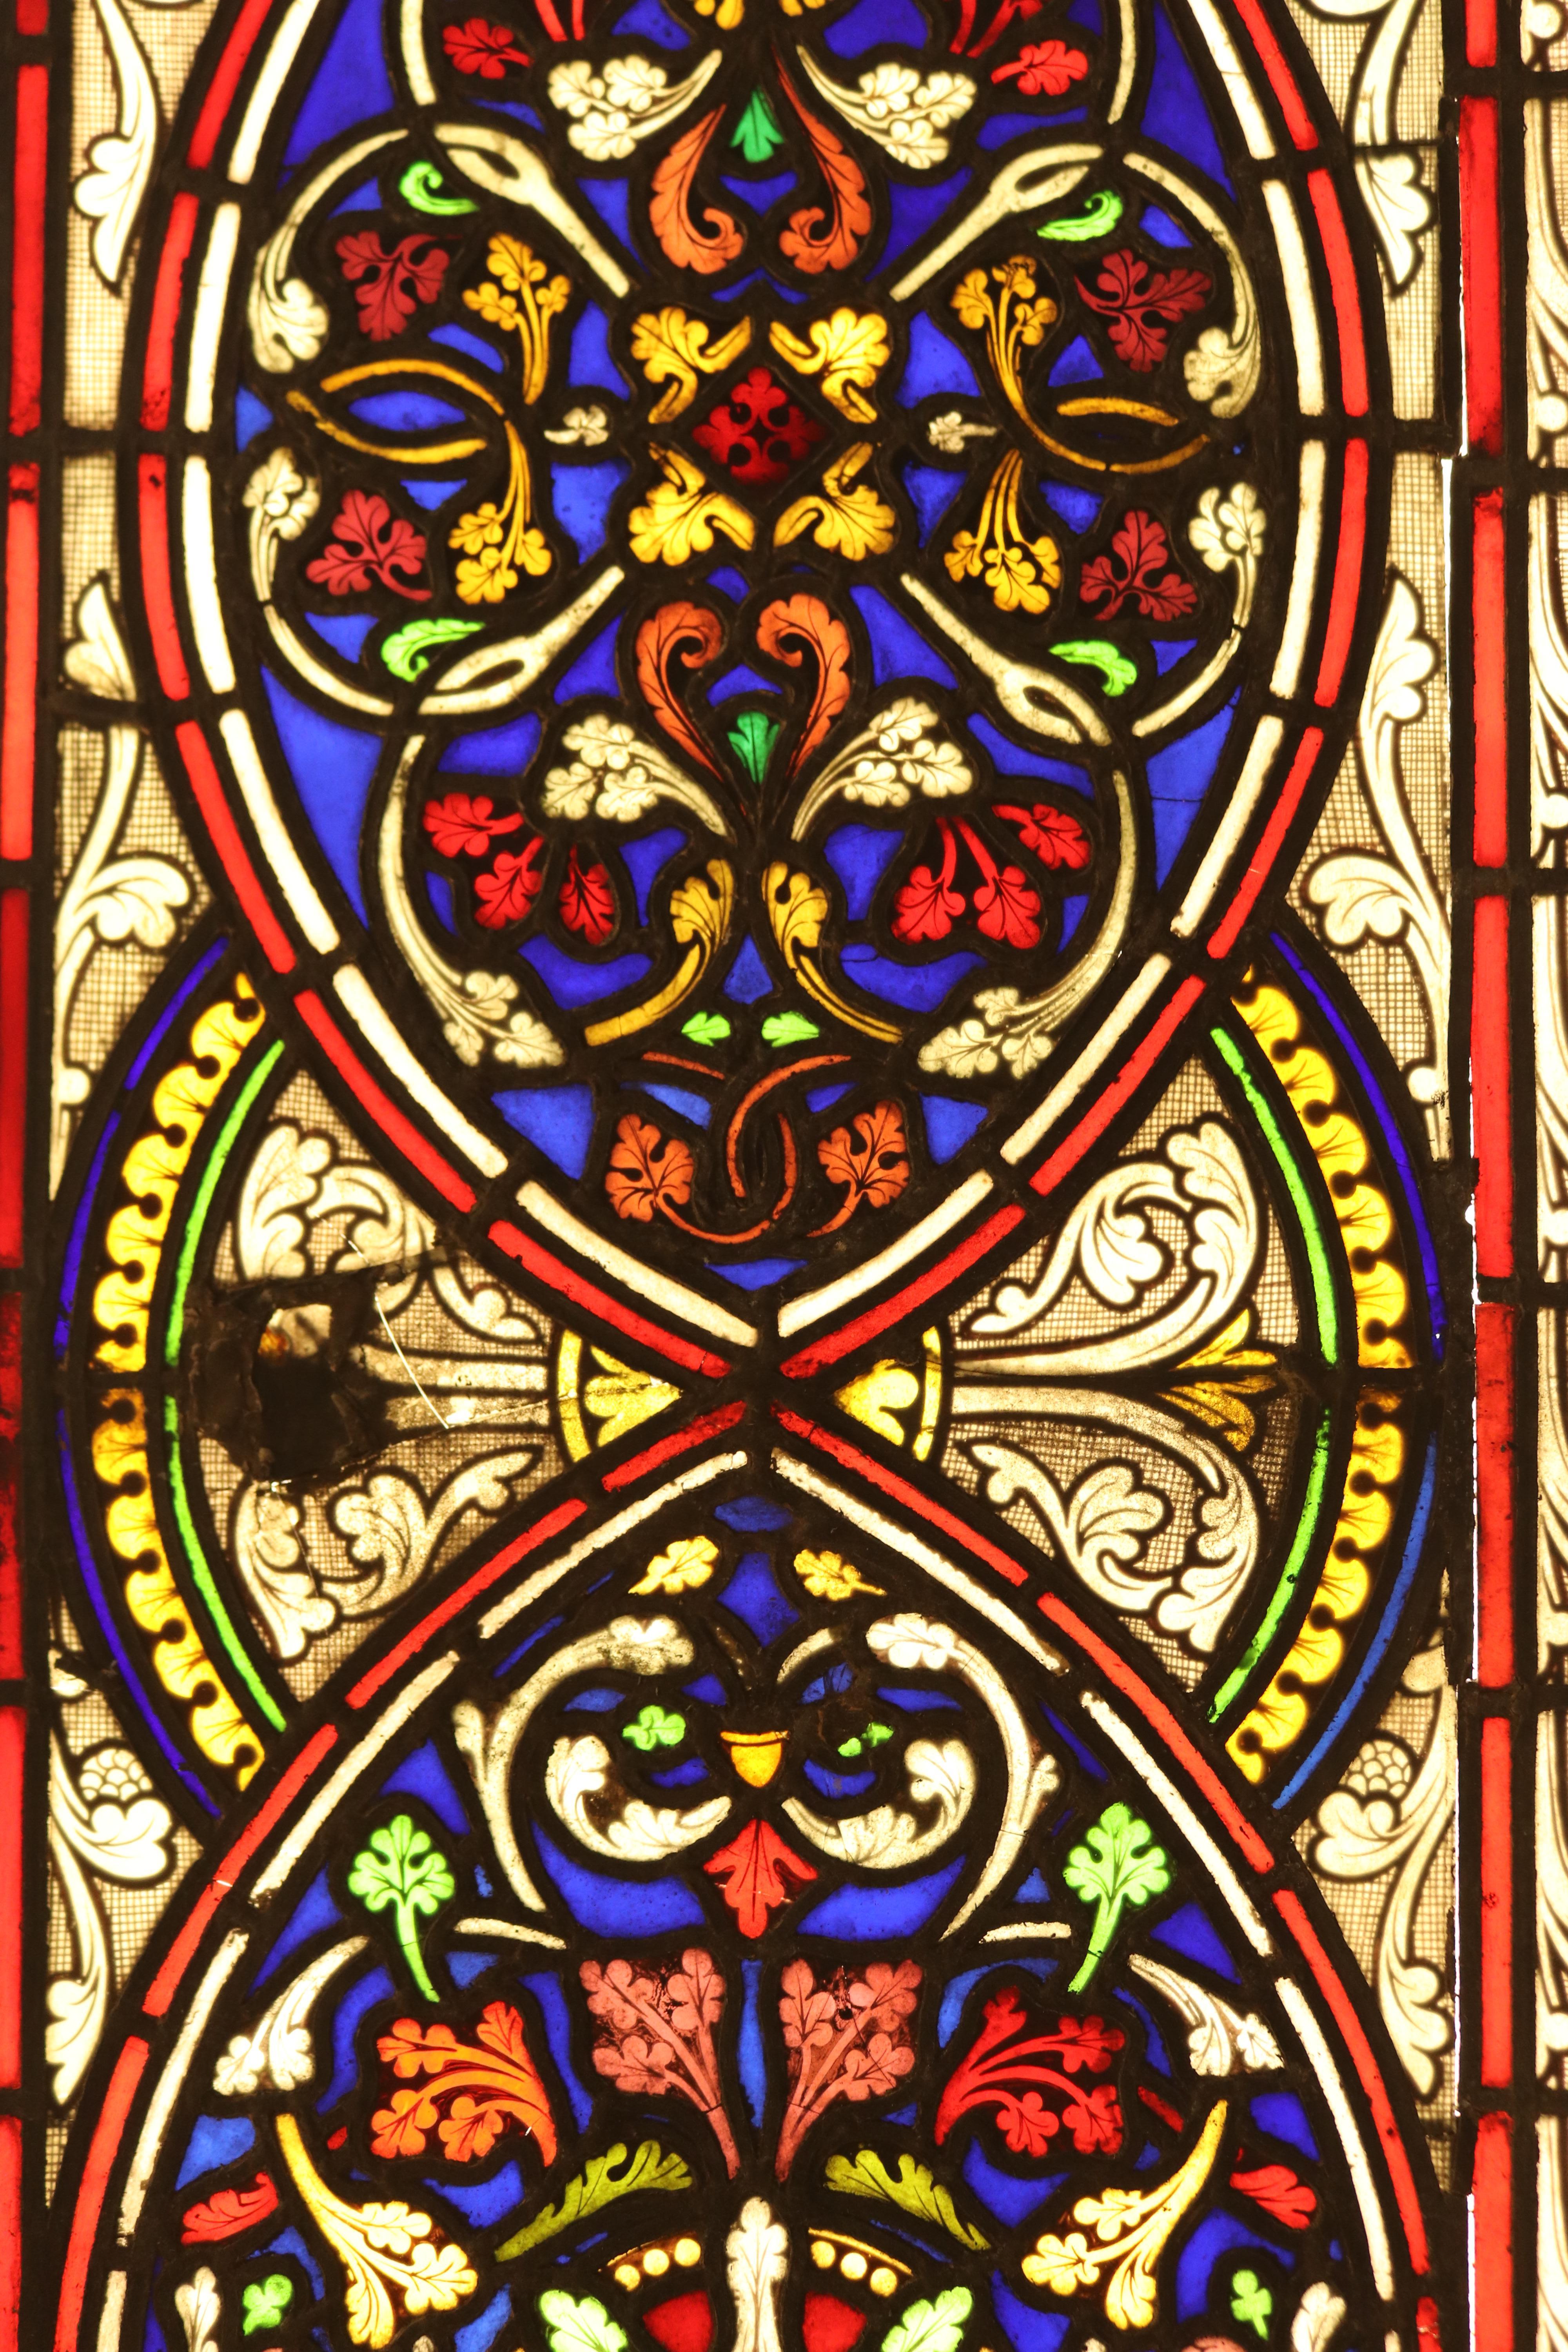 medieval style windows